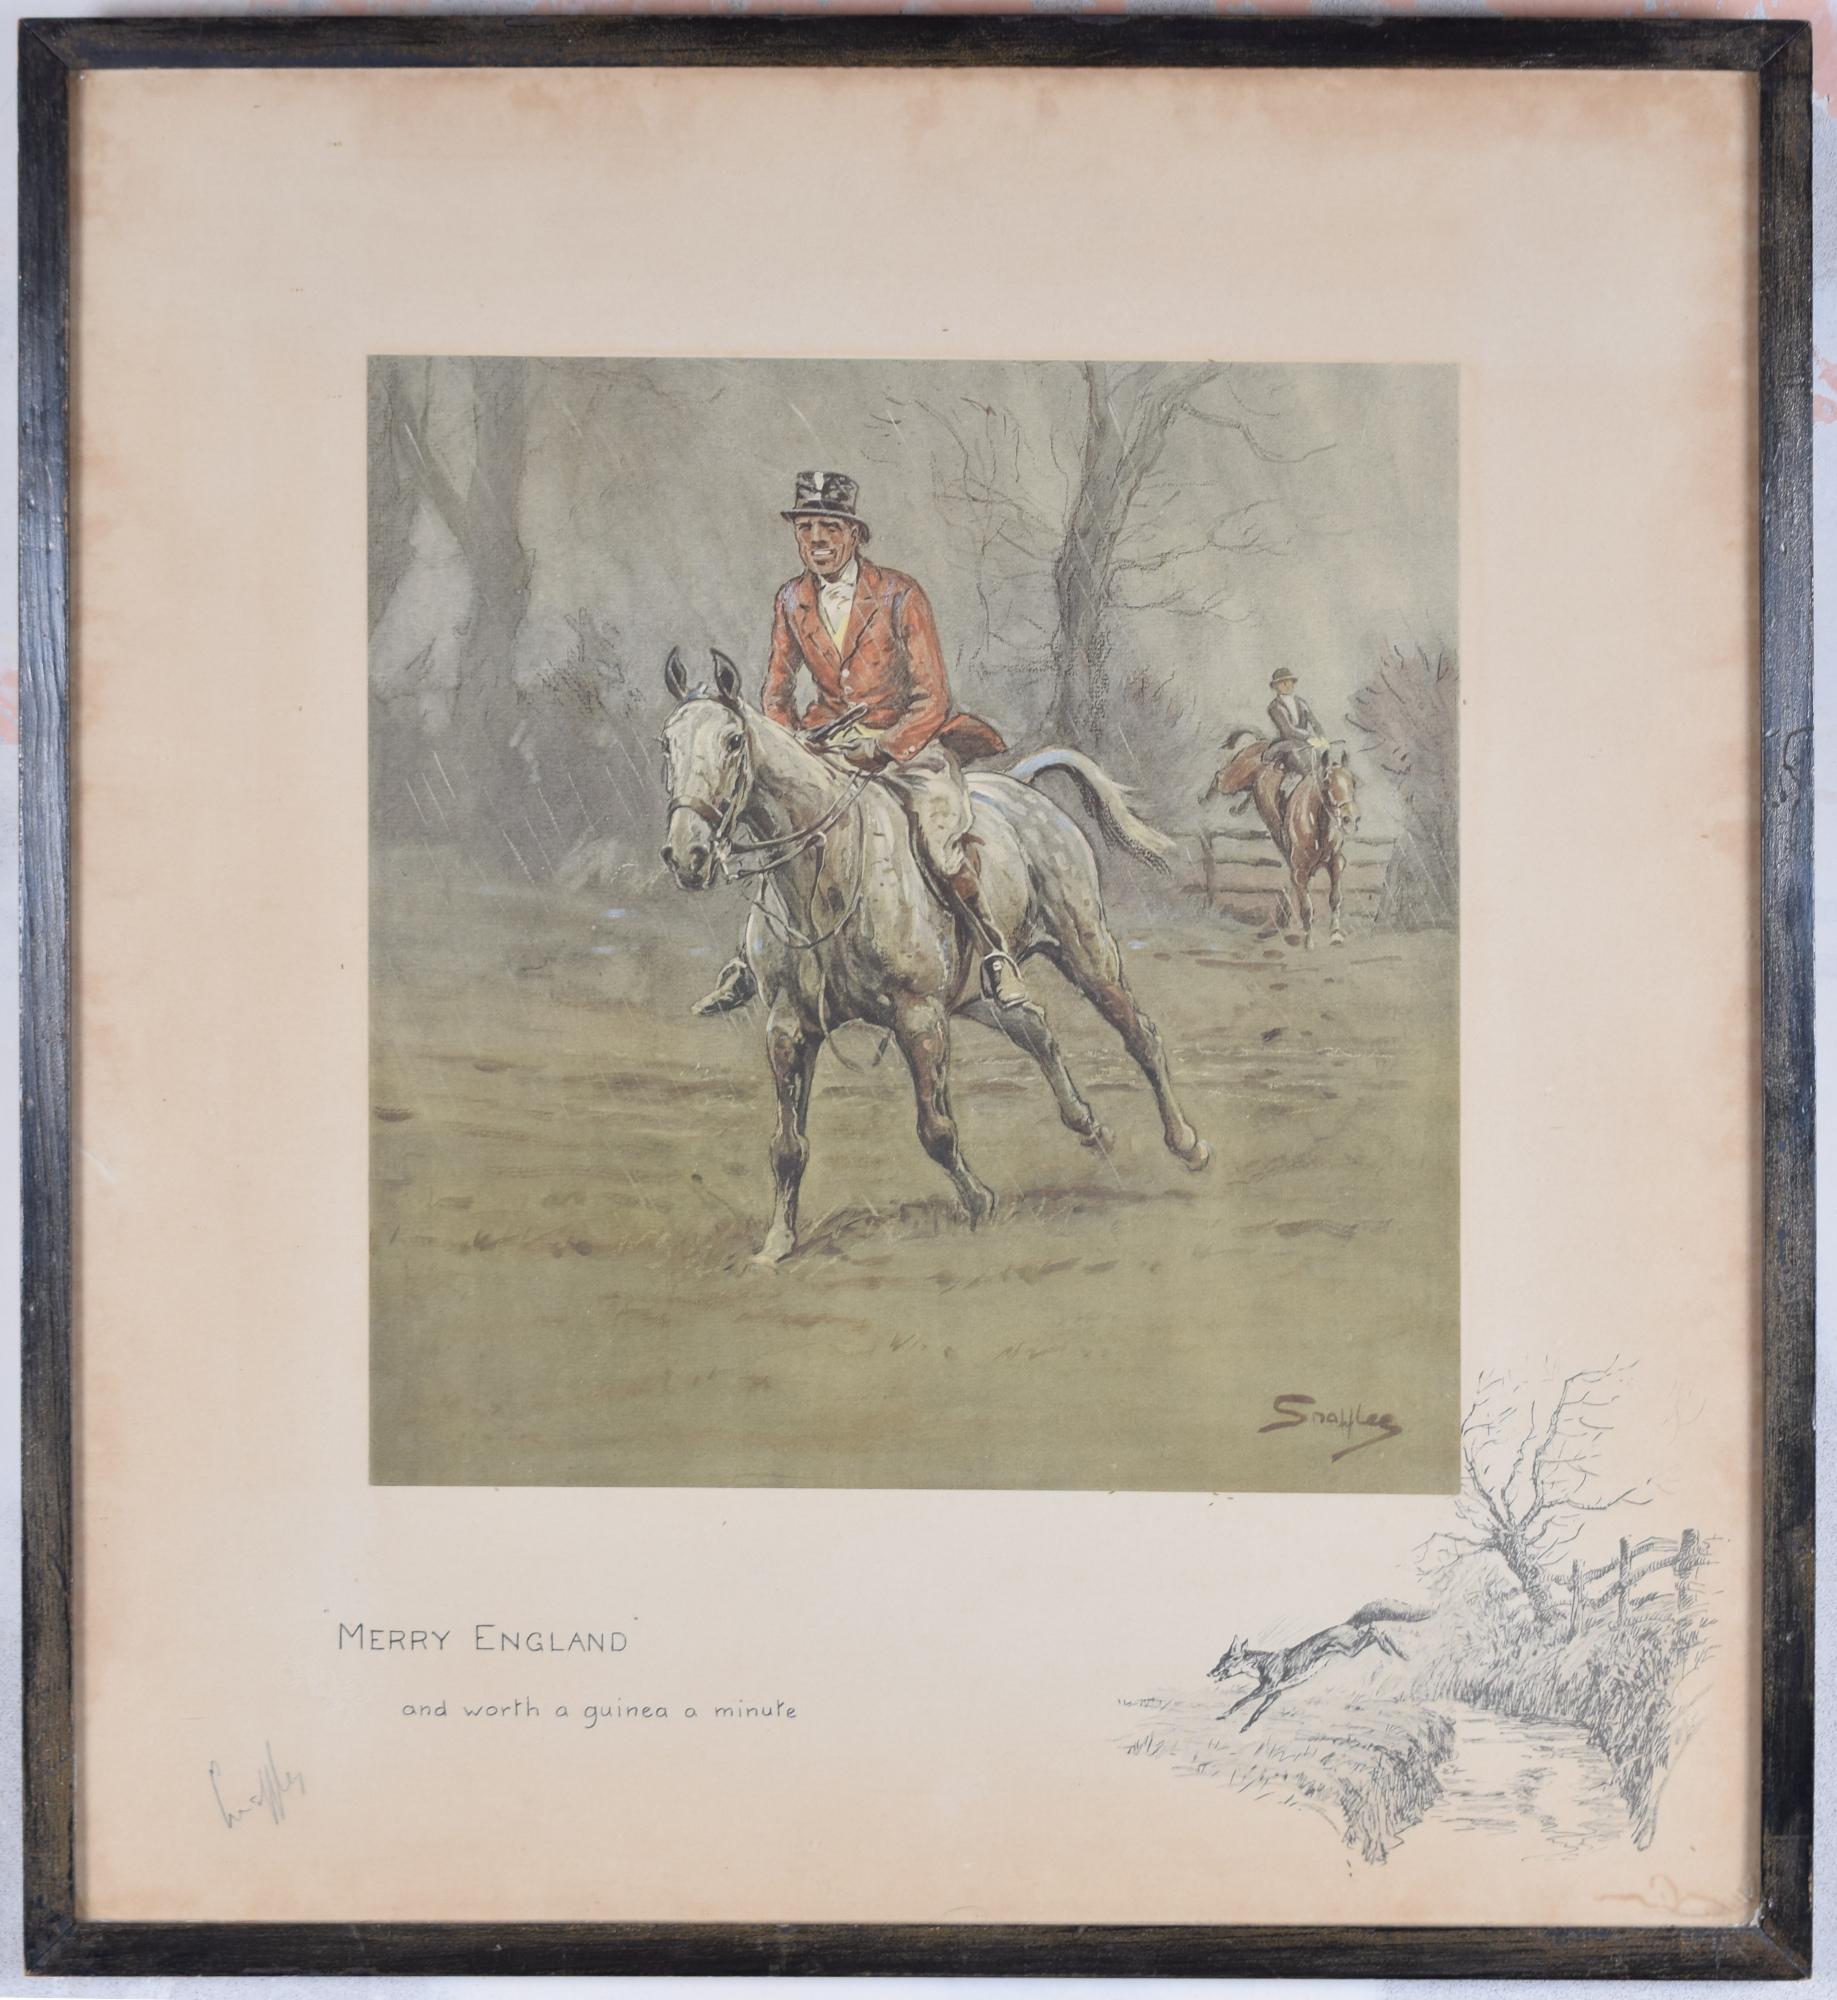 Landscape Print Charles "Snaffles" Johnson Payne - Impression de chasse au renard « Merry England and worth a guinea a minute » de Snaffles